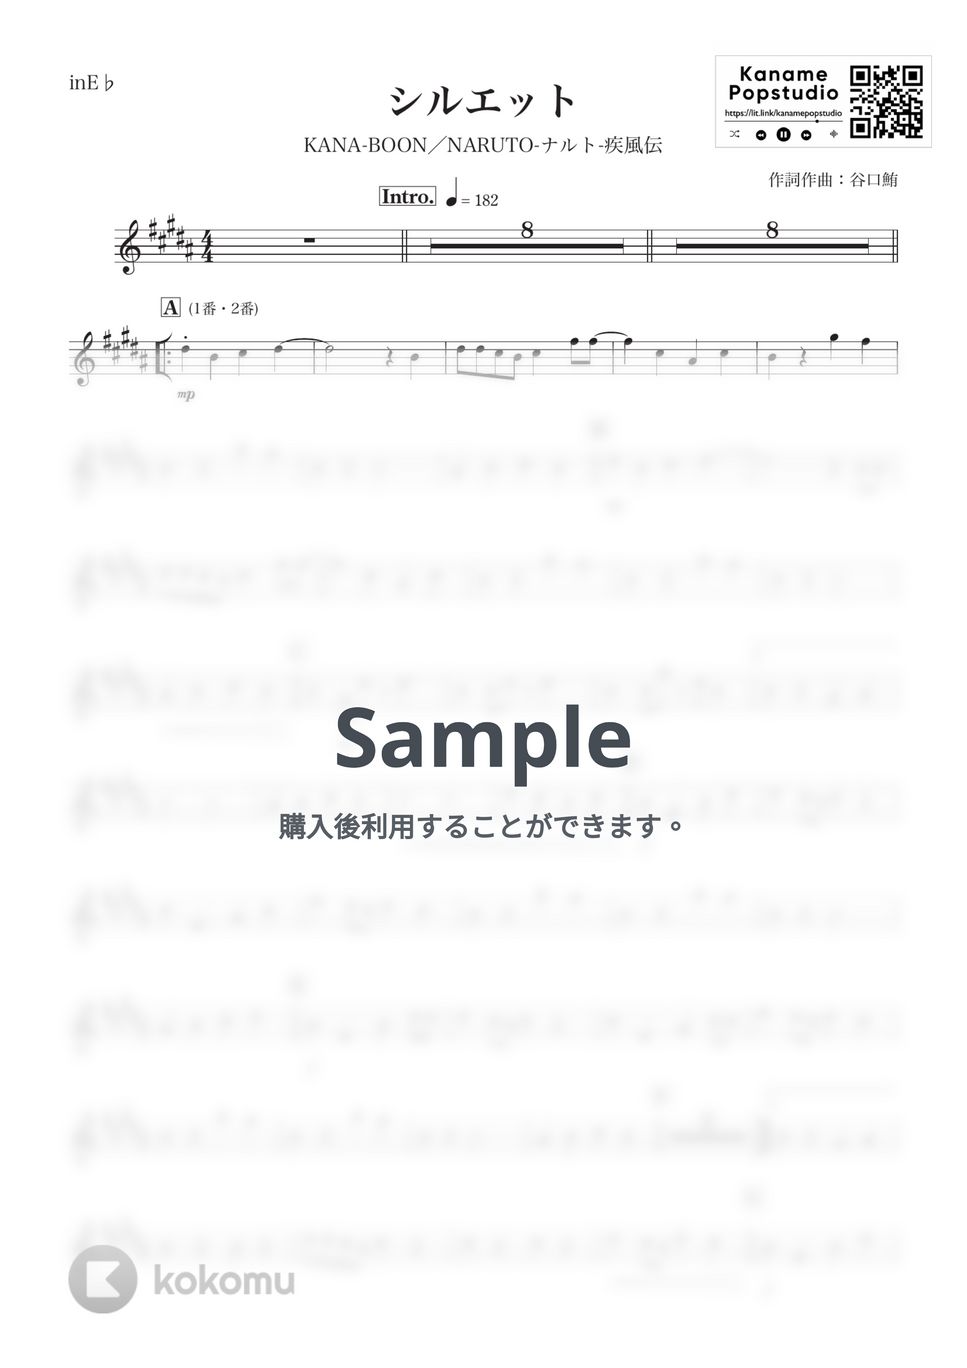 KANA-BOON - 【ナルト疾風伝】シルエット (E♭) by Kaname@Popstudio